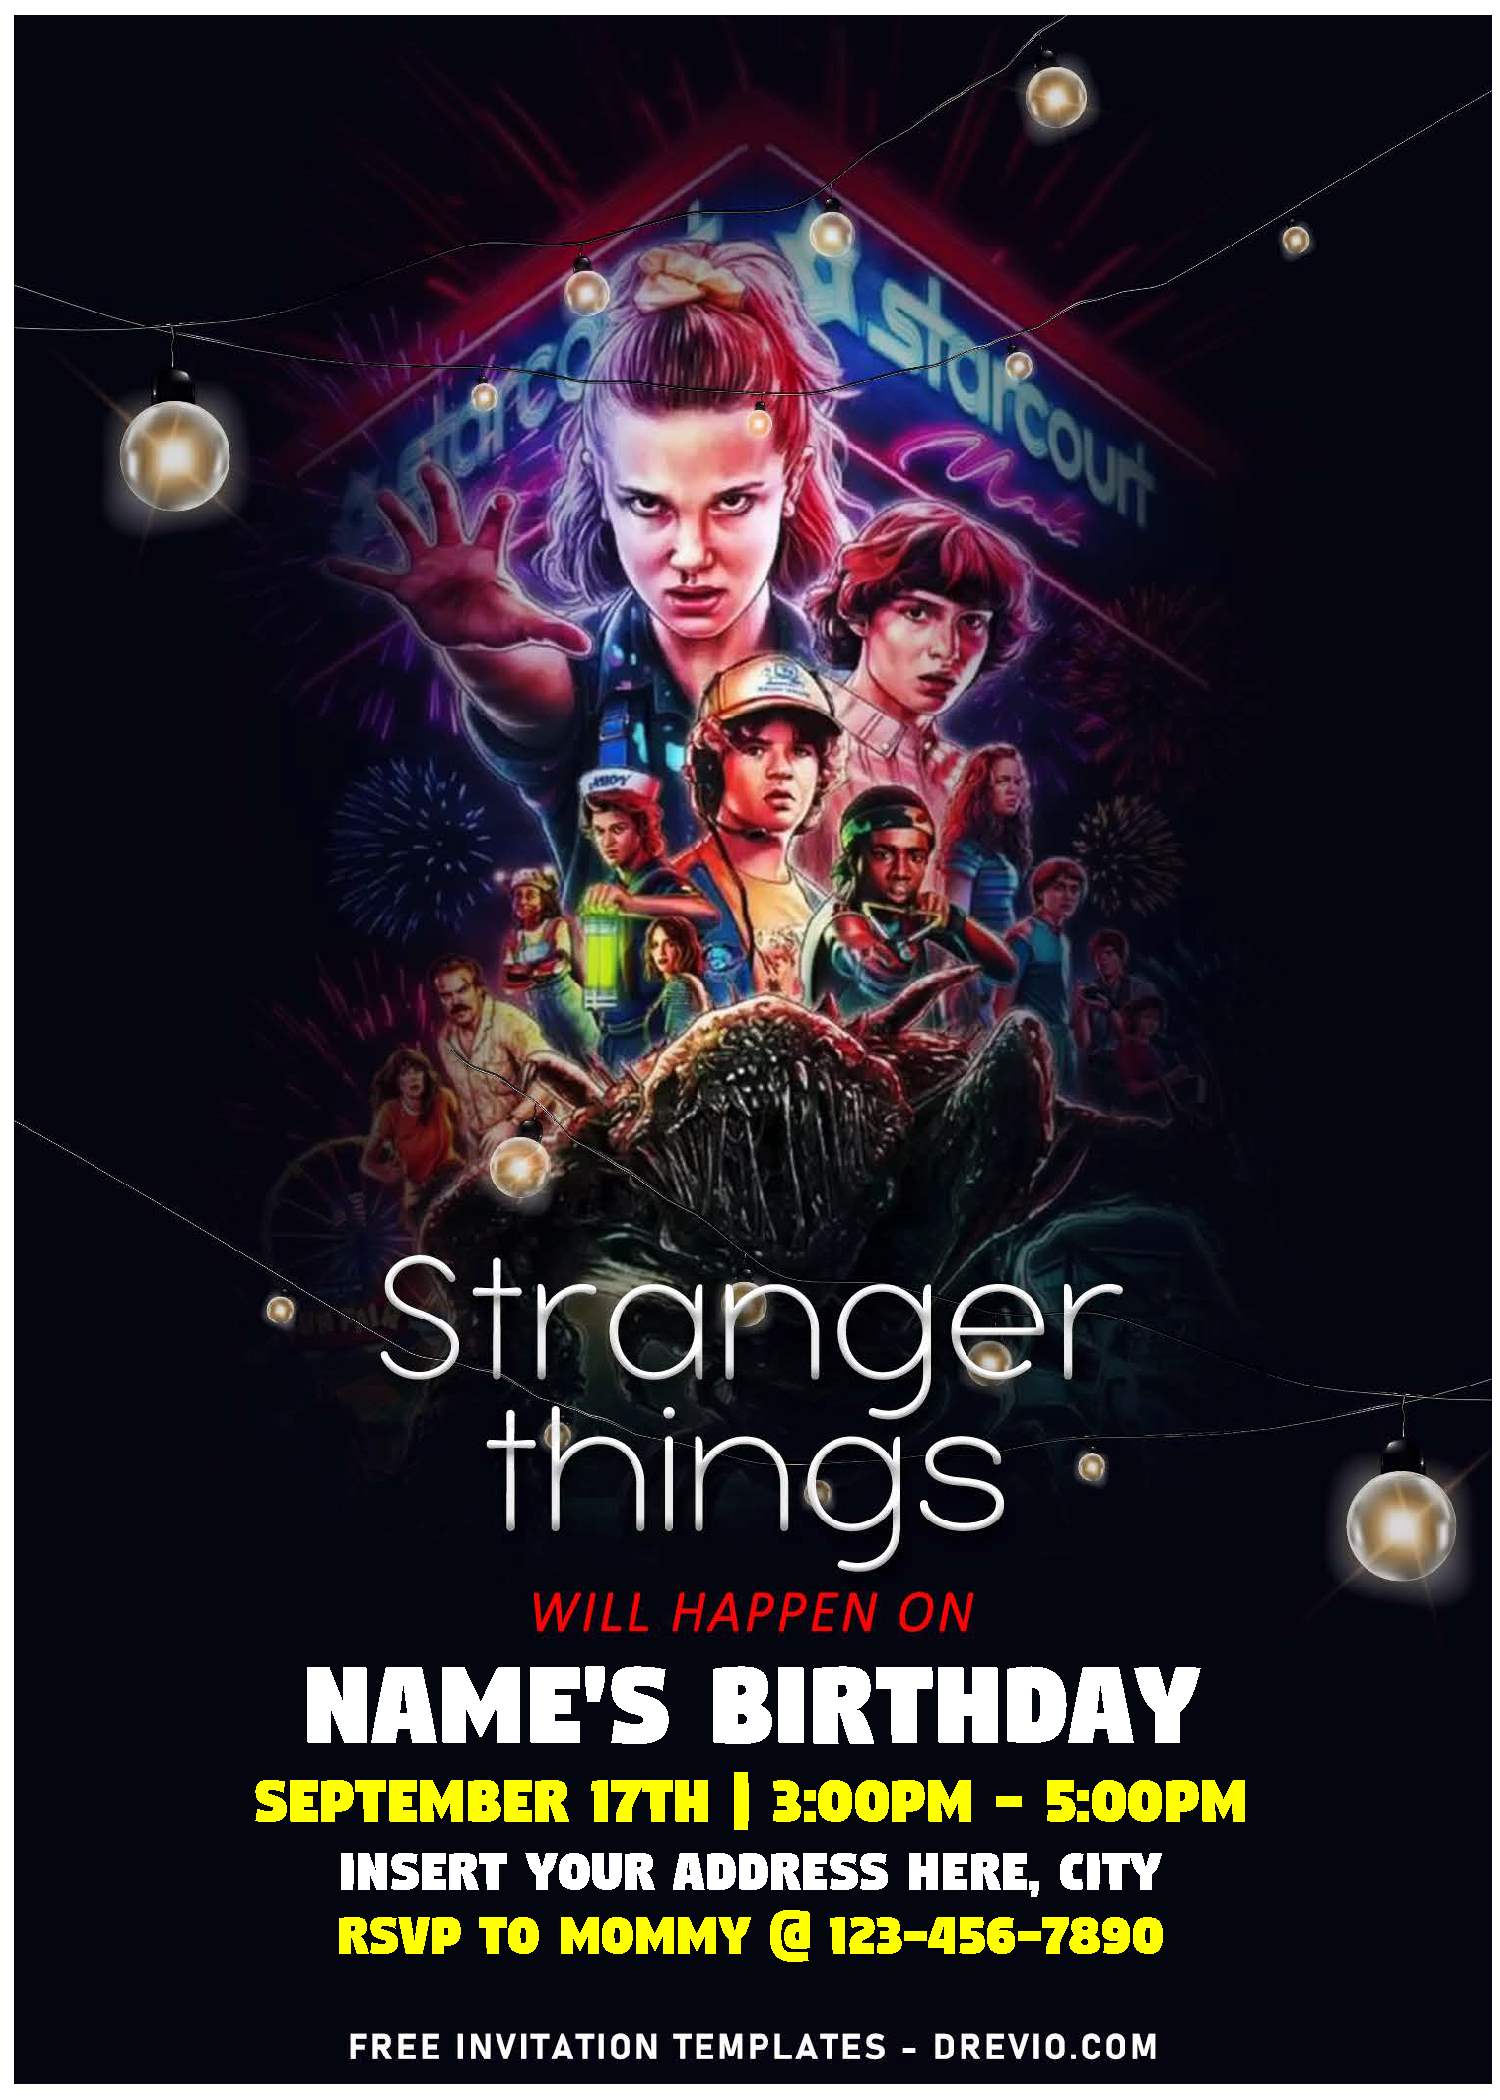 stranger-things-lights-birthday-party-invitation-ubicaciondepersonas-cdmx-gob-mx